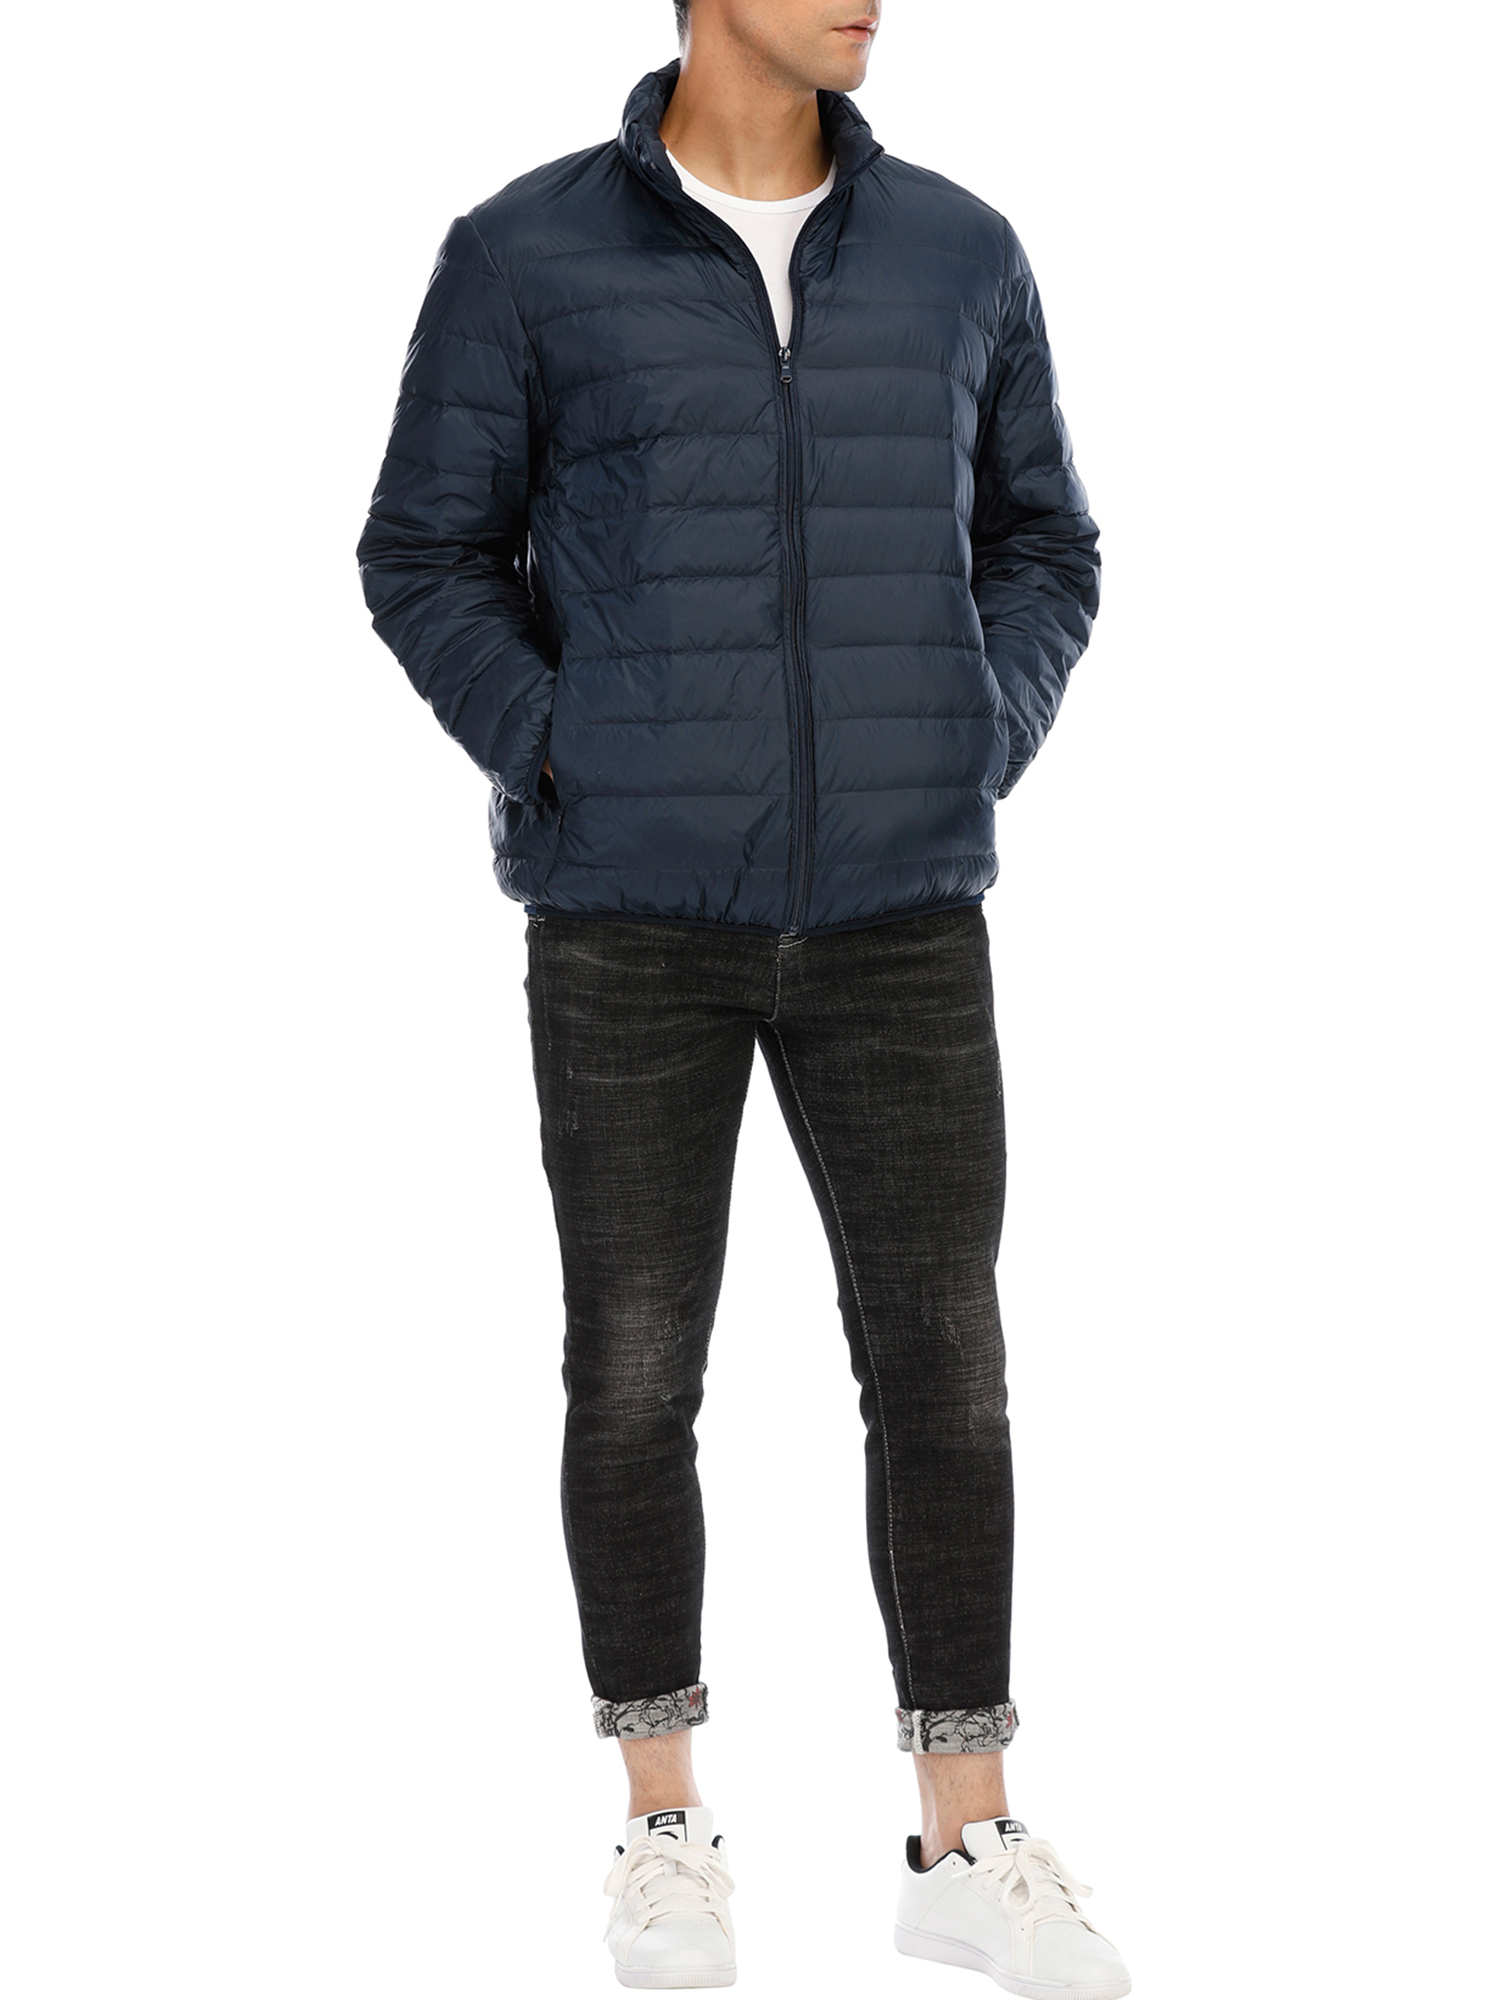 SAYFUT Men's Down Winter Packable Jacket Big & Tall Sizes M-4XL Outwear Jacket Coat Black/Blue/Gray - image 2 of 8